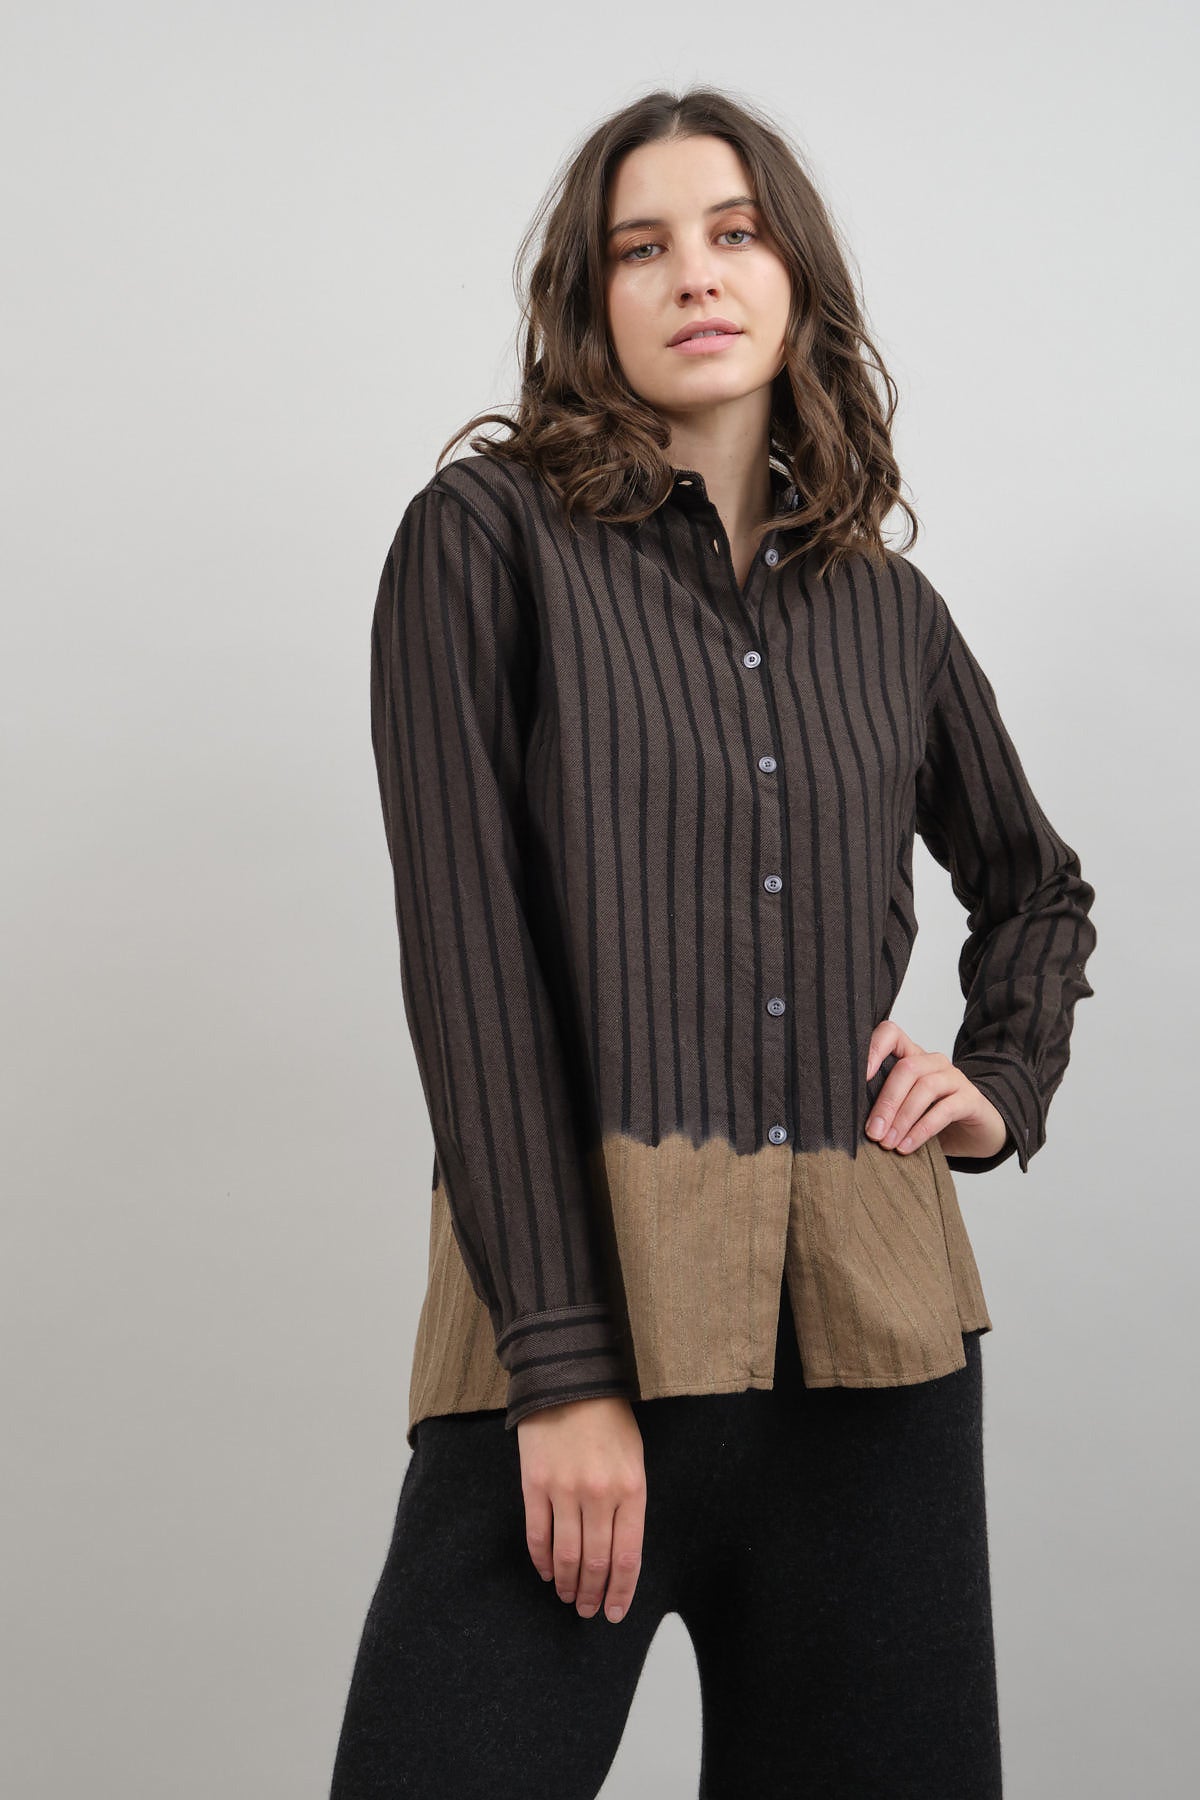 Wool Cotton Dobby Stripe Blouse from Suzusan